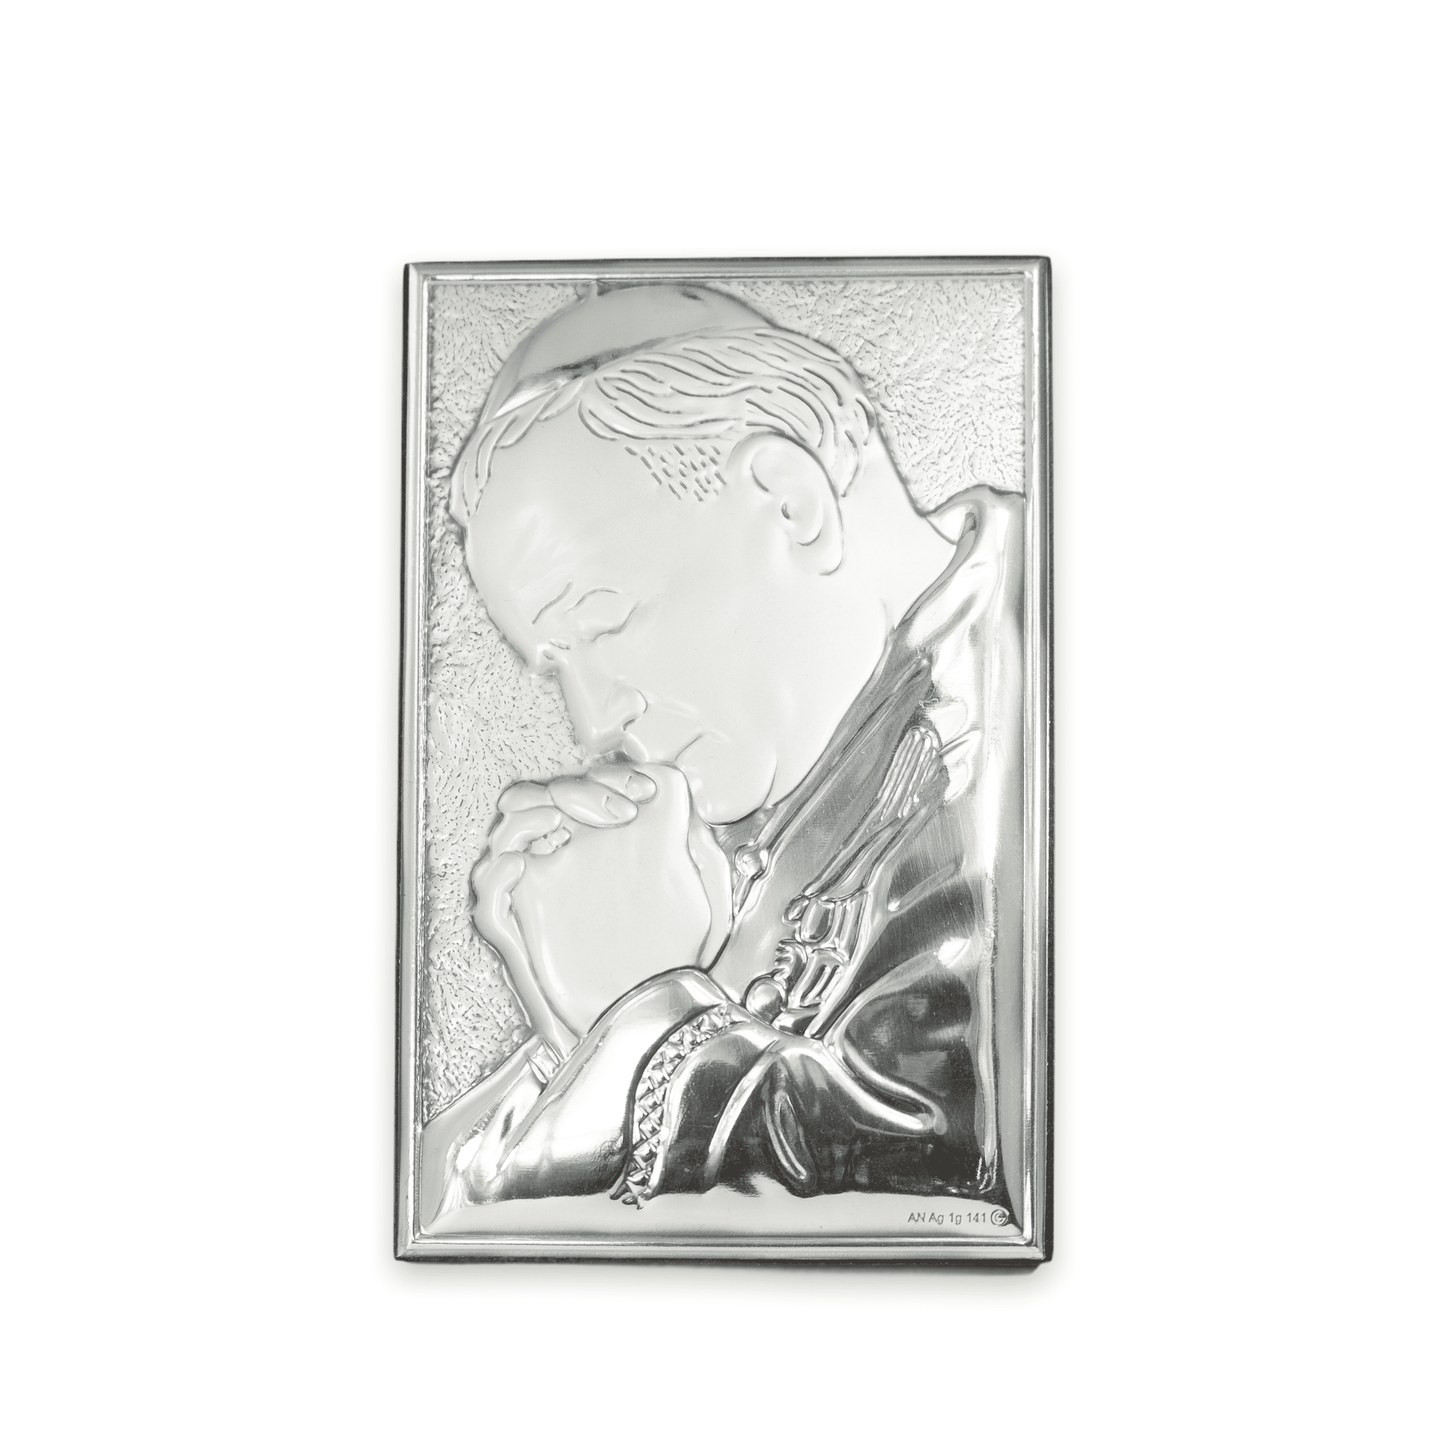 MONDO CATTOLICO 9,5X6 cm Religious Picture Praying Pope John Paul II Bilaminate Sterling Silver